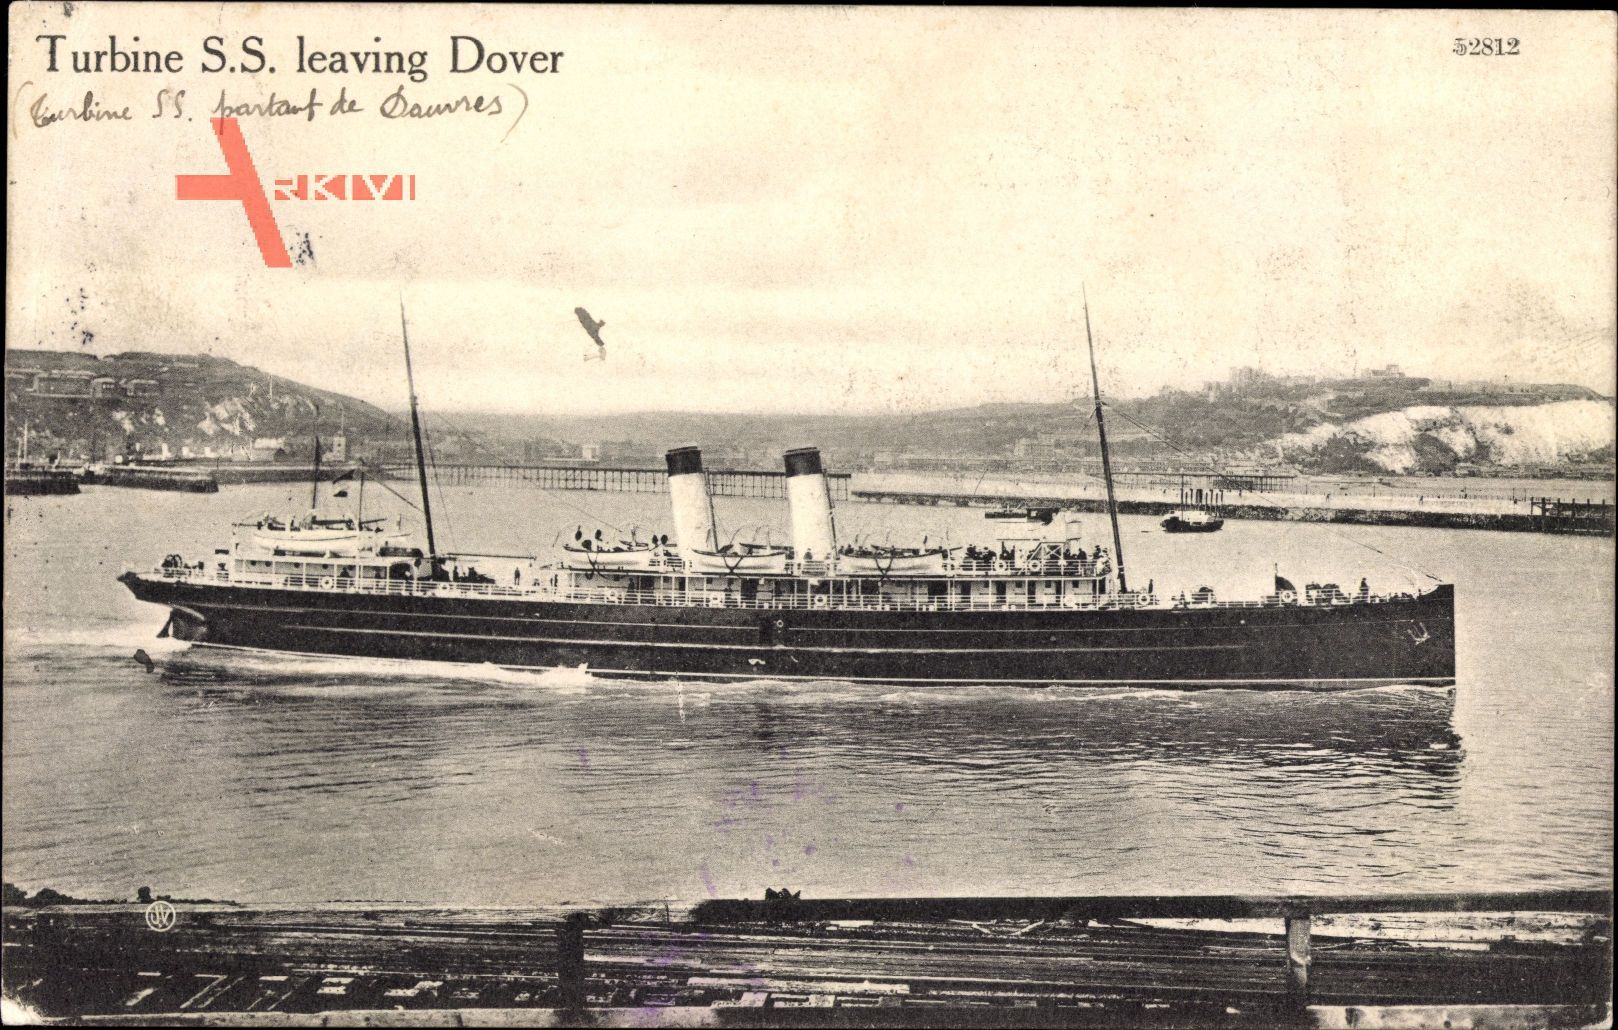 Dover South East England, Turbine S. S. leaving port, Fährschiff